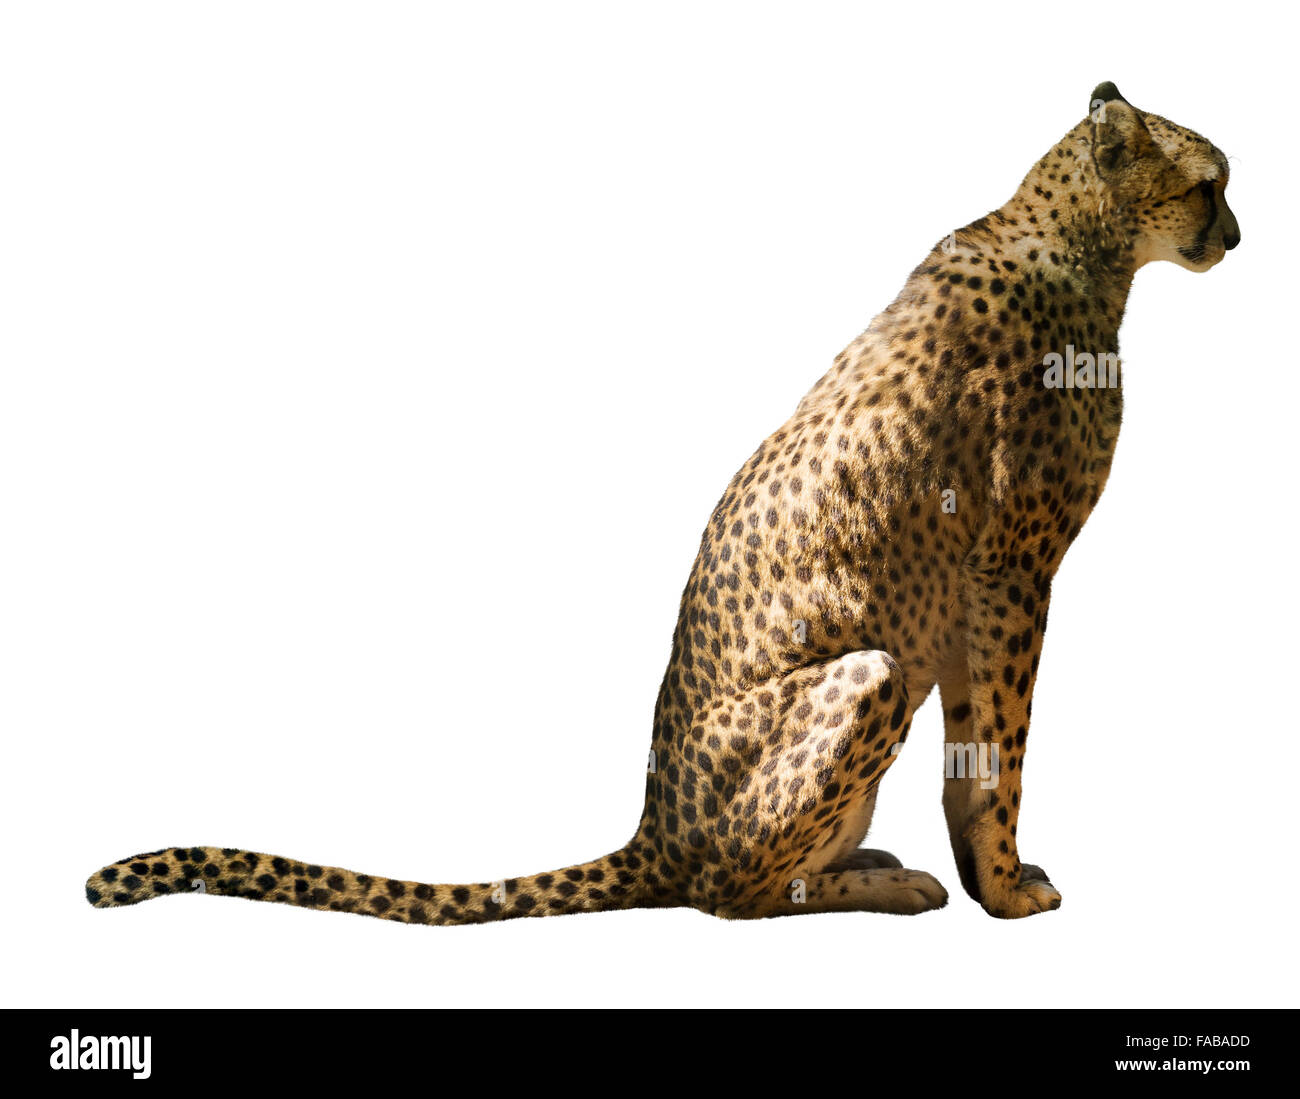 Sitting cheetah over white background Stock Photo